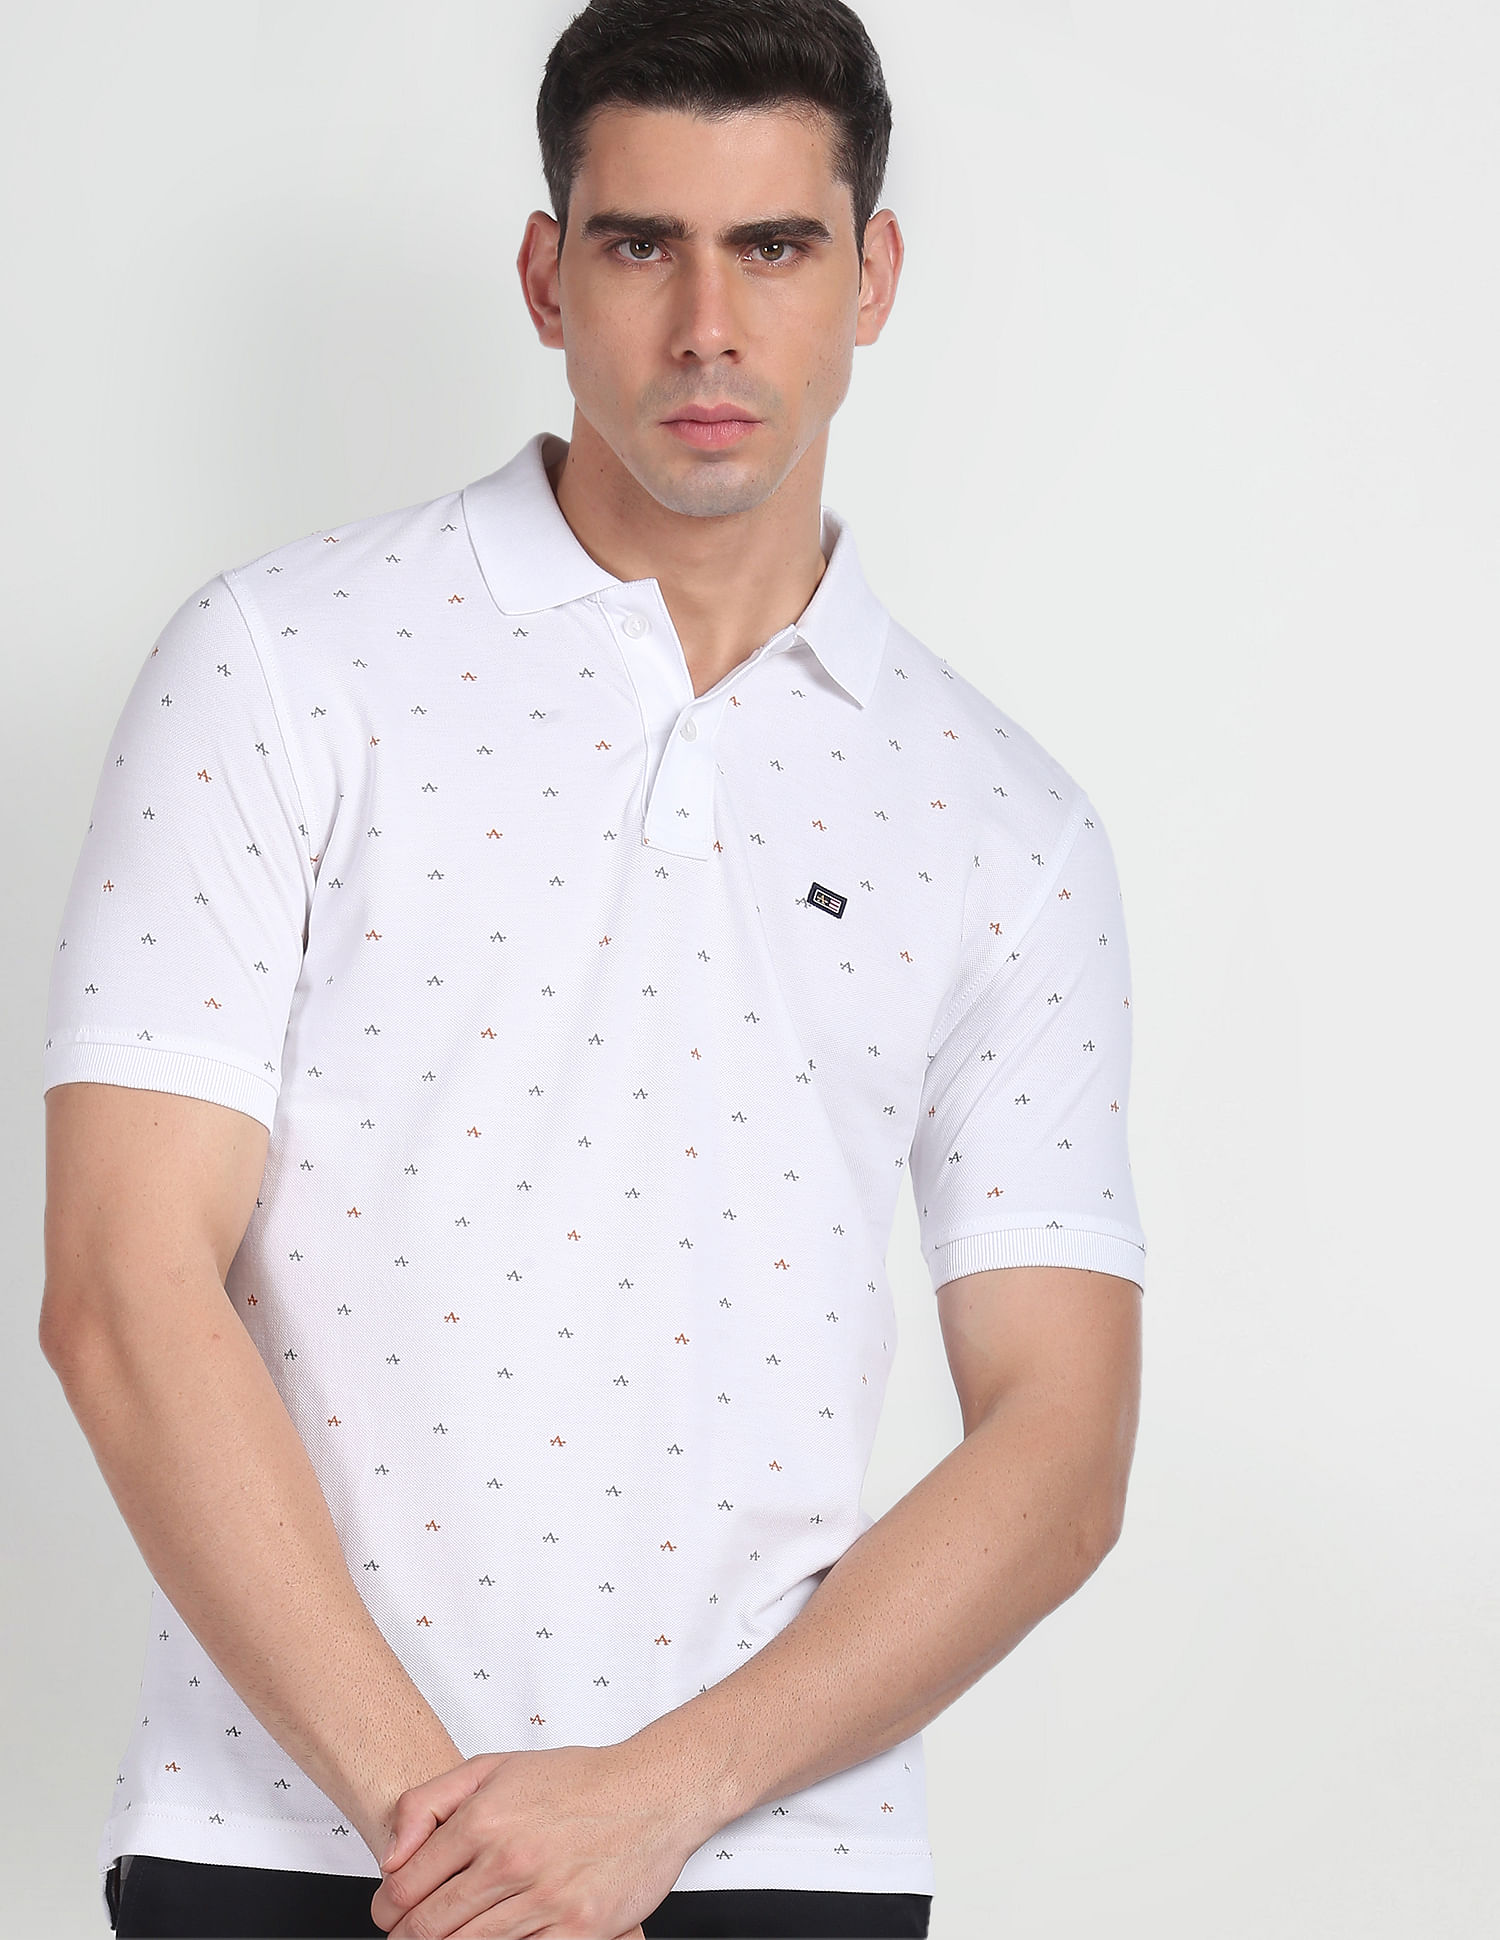 Arrow Sports Brand Print Cotton Polo Shirt, White (S)